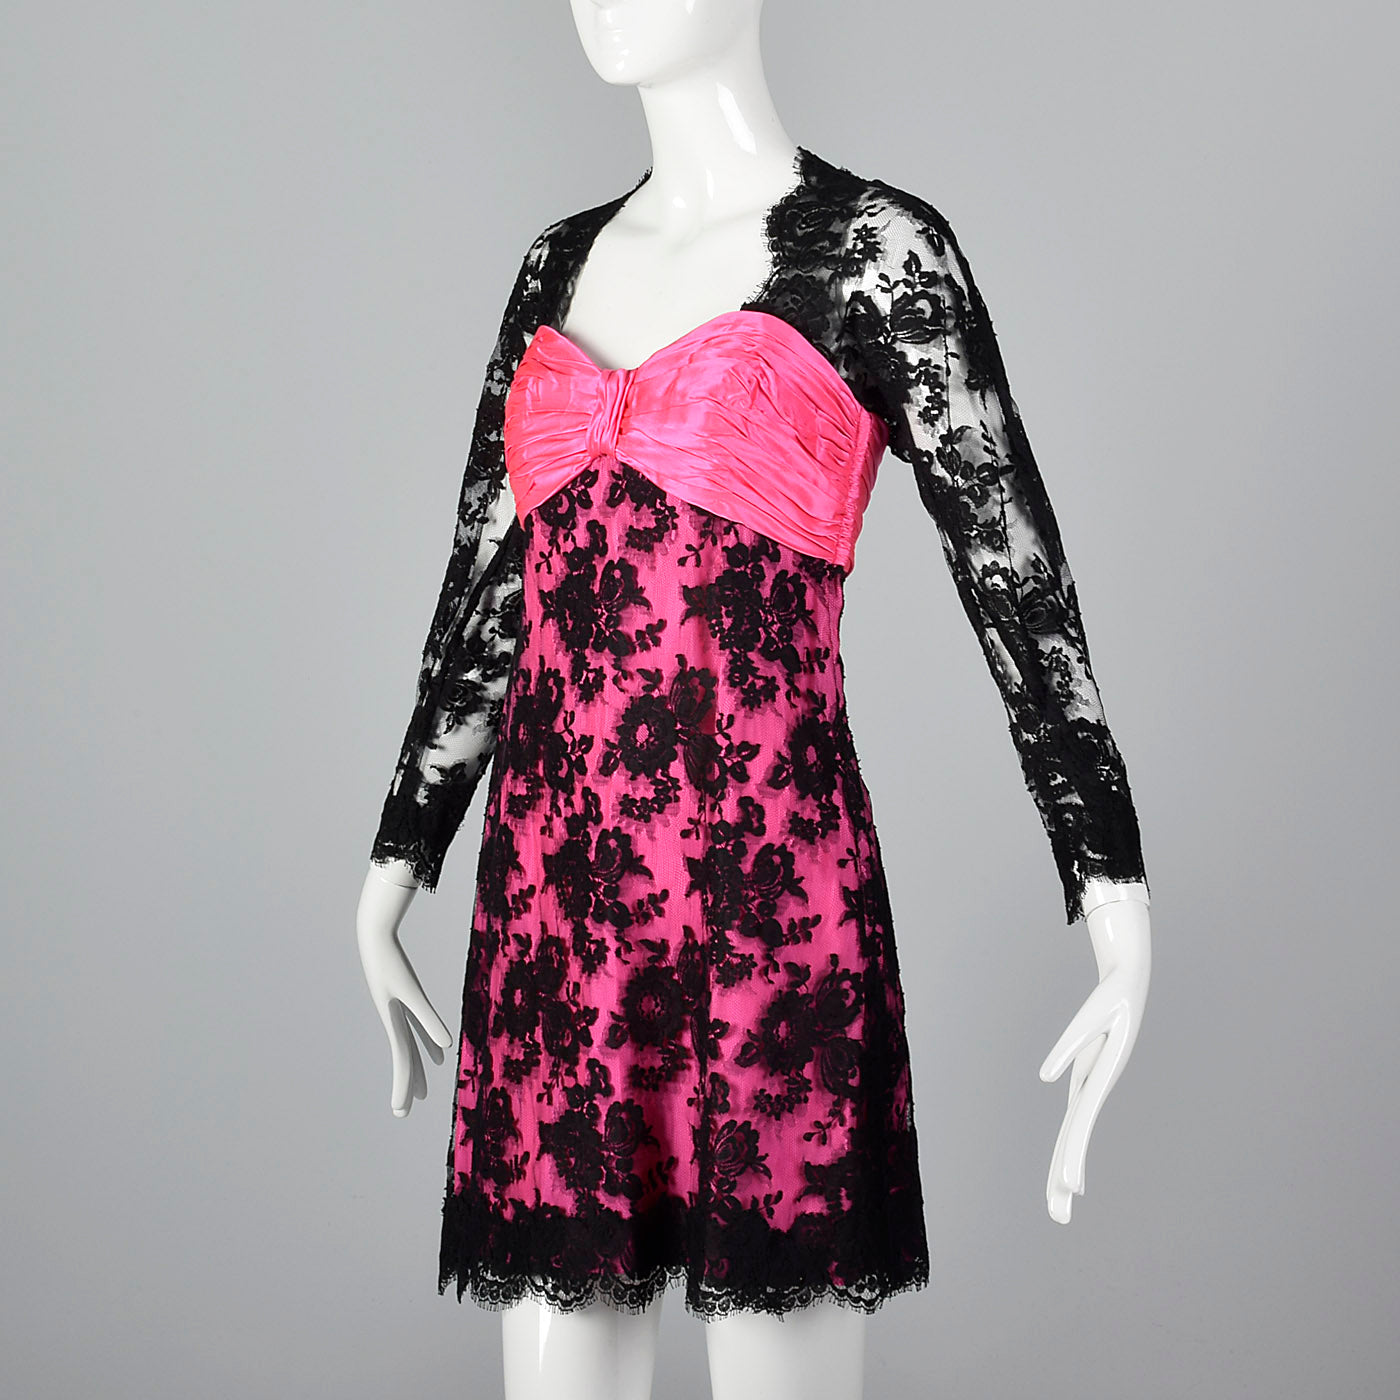 1980s Travilla Hot Pink and Black Lace Dress